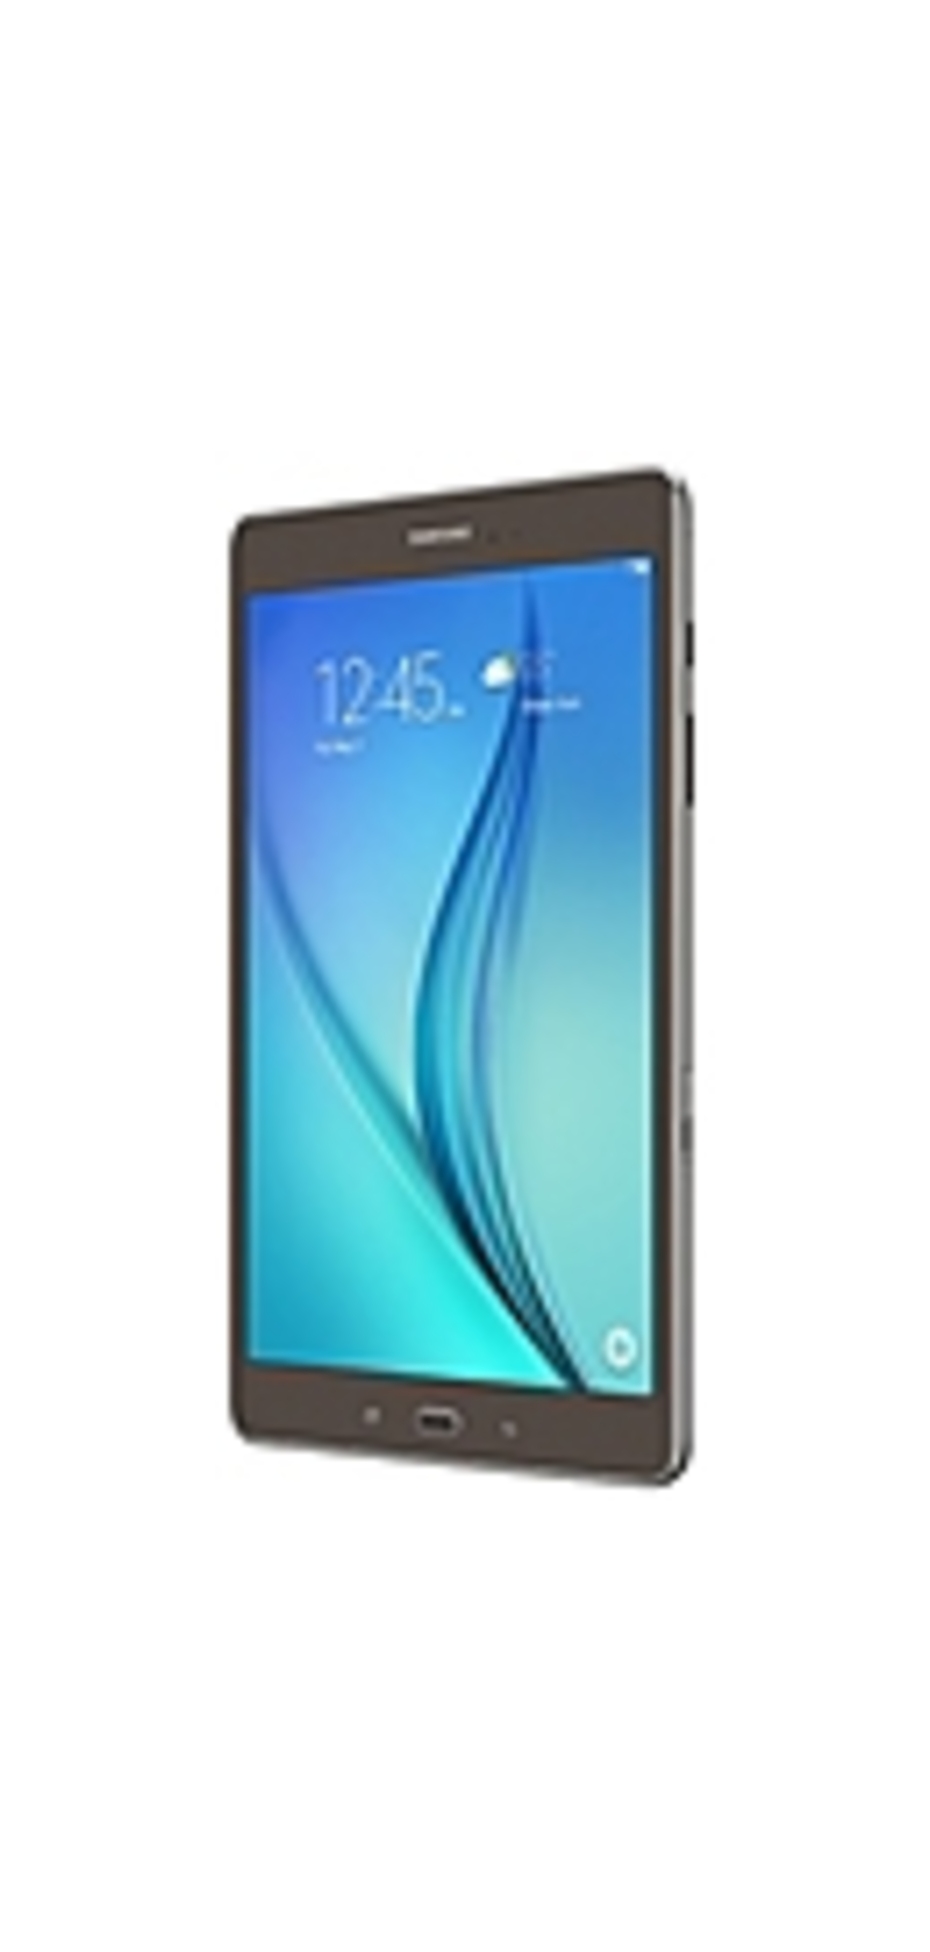 Samsung Galaxy Tab A SM-T550 16 GB Tablet - 9.7" - Wireless LAN - Qualcomm Snapdragon 410 APQ8016 Quad-core (4 Core) 1.20 GHz - Smoky Titanium - 1.50